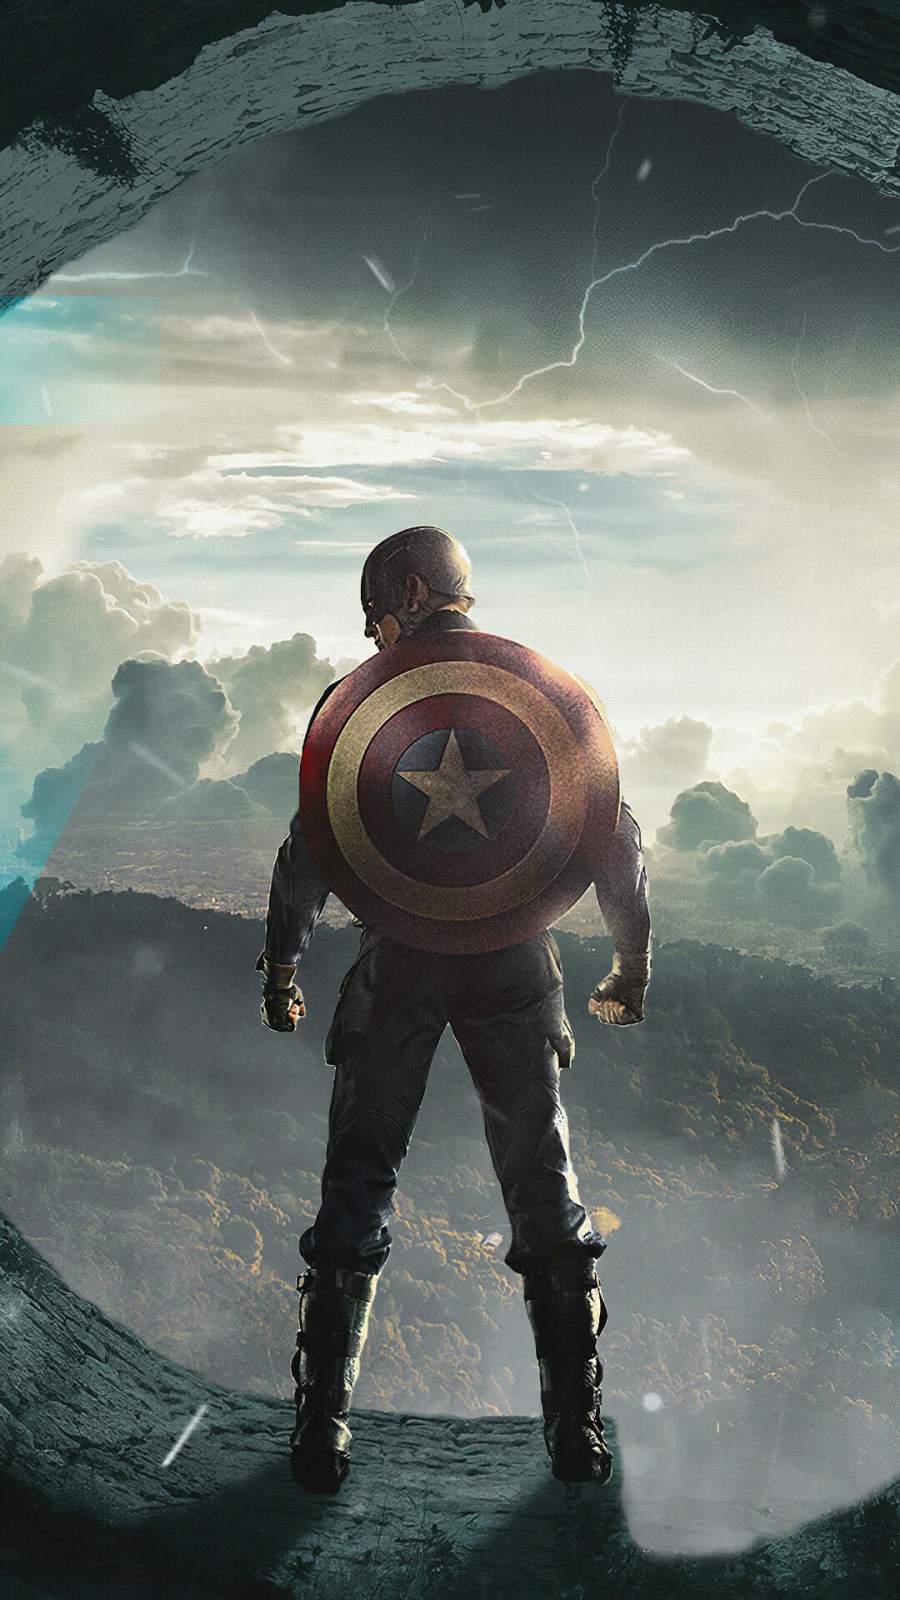 Captain America 4K IPhone Wallpaper - IPhone Wallpapers : iPhone Wallpapers